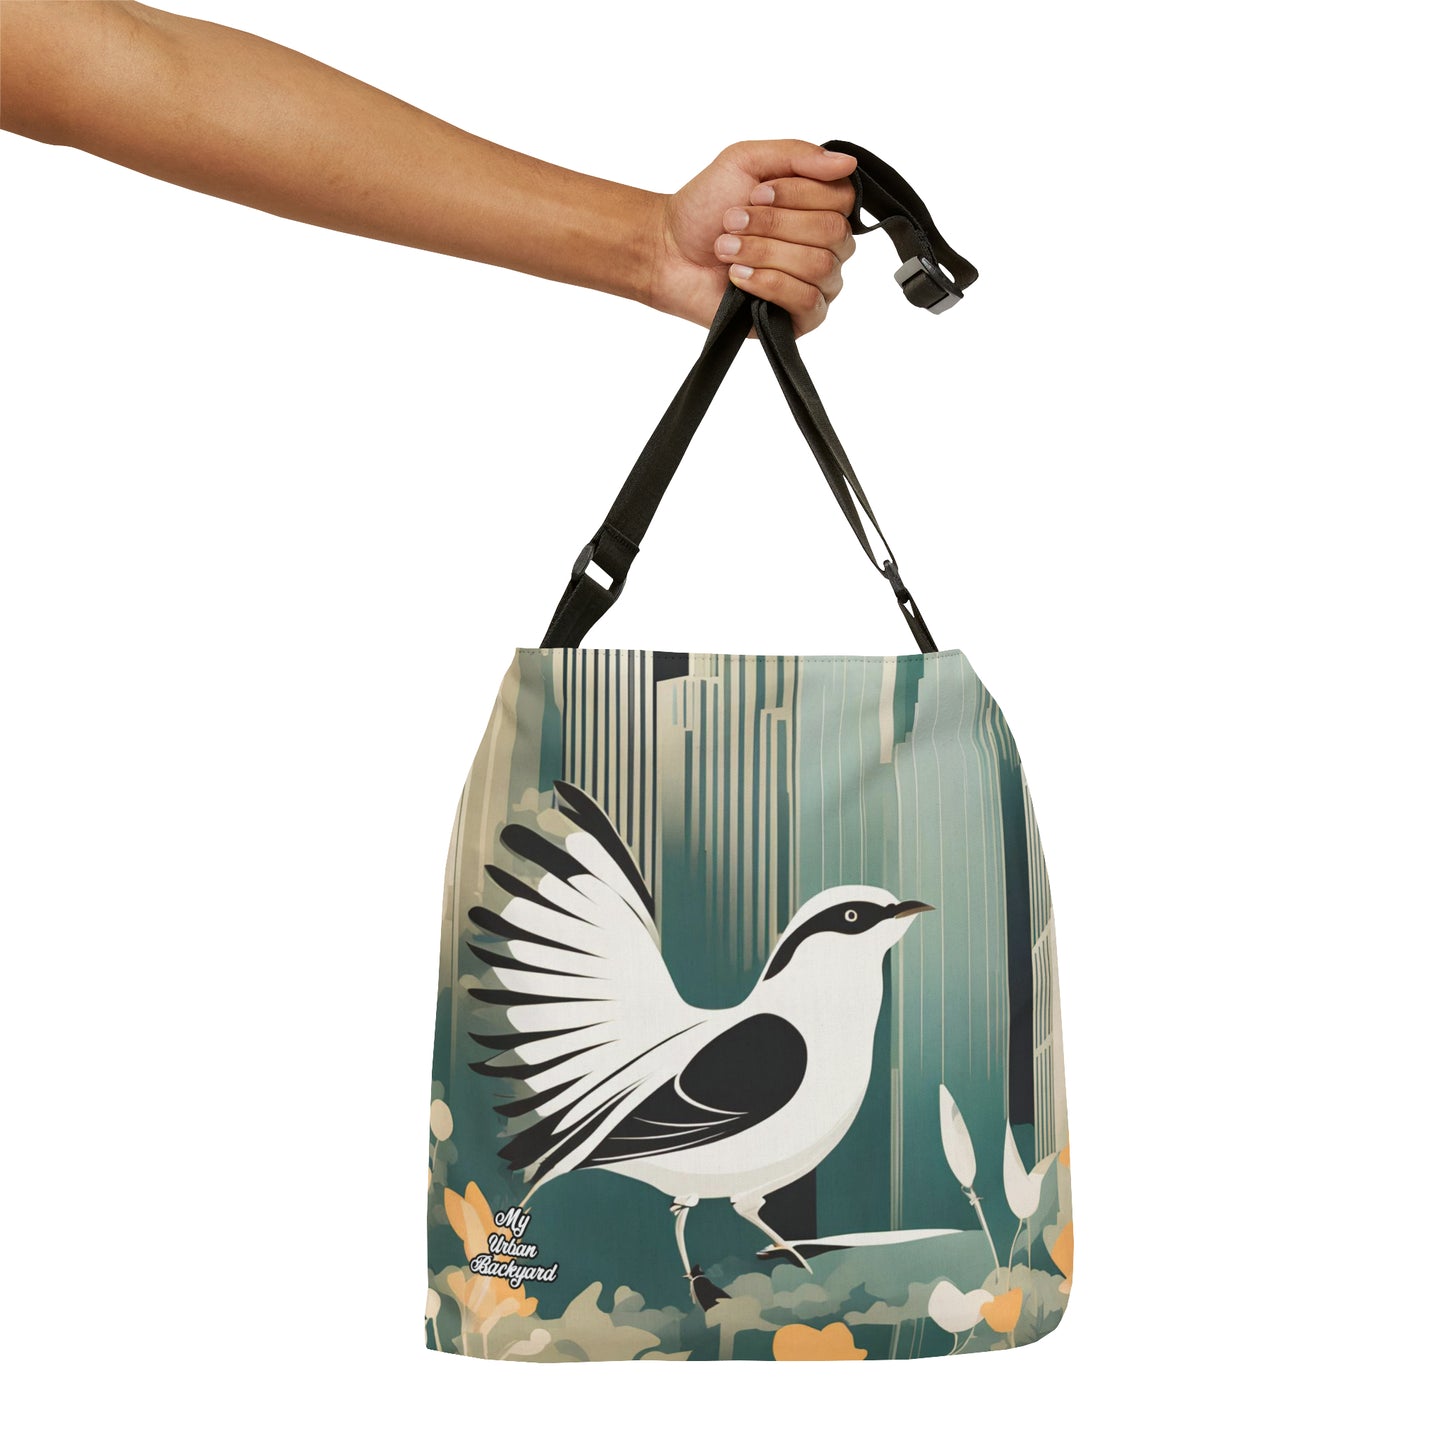 Urban Bird, Tote Bag with Adjustable Strap - Trendy and Versatile